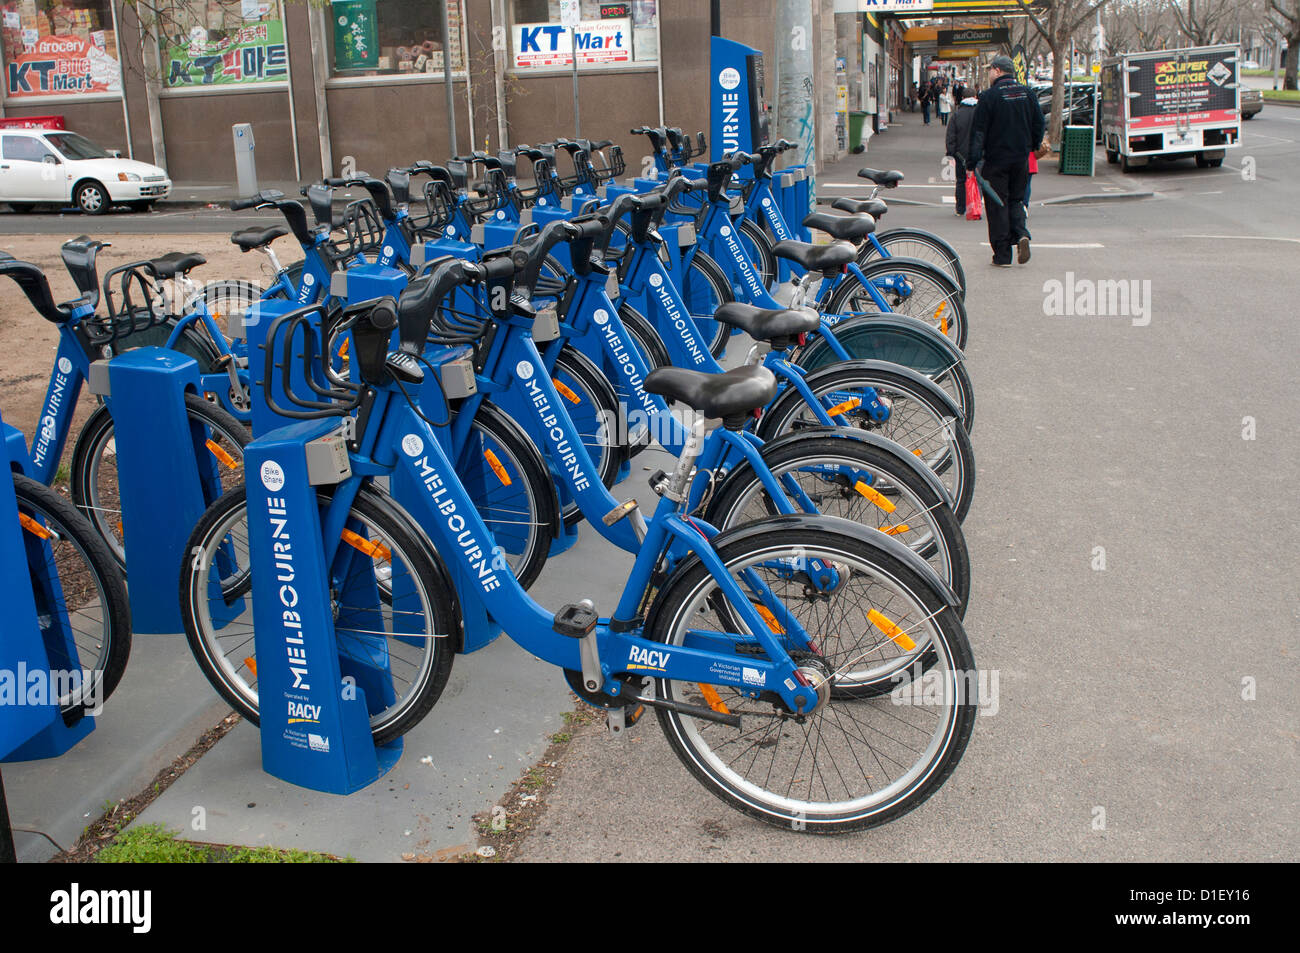 The Melbourne bicycle rental scheme Stock Photo